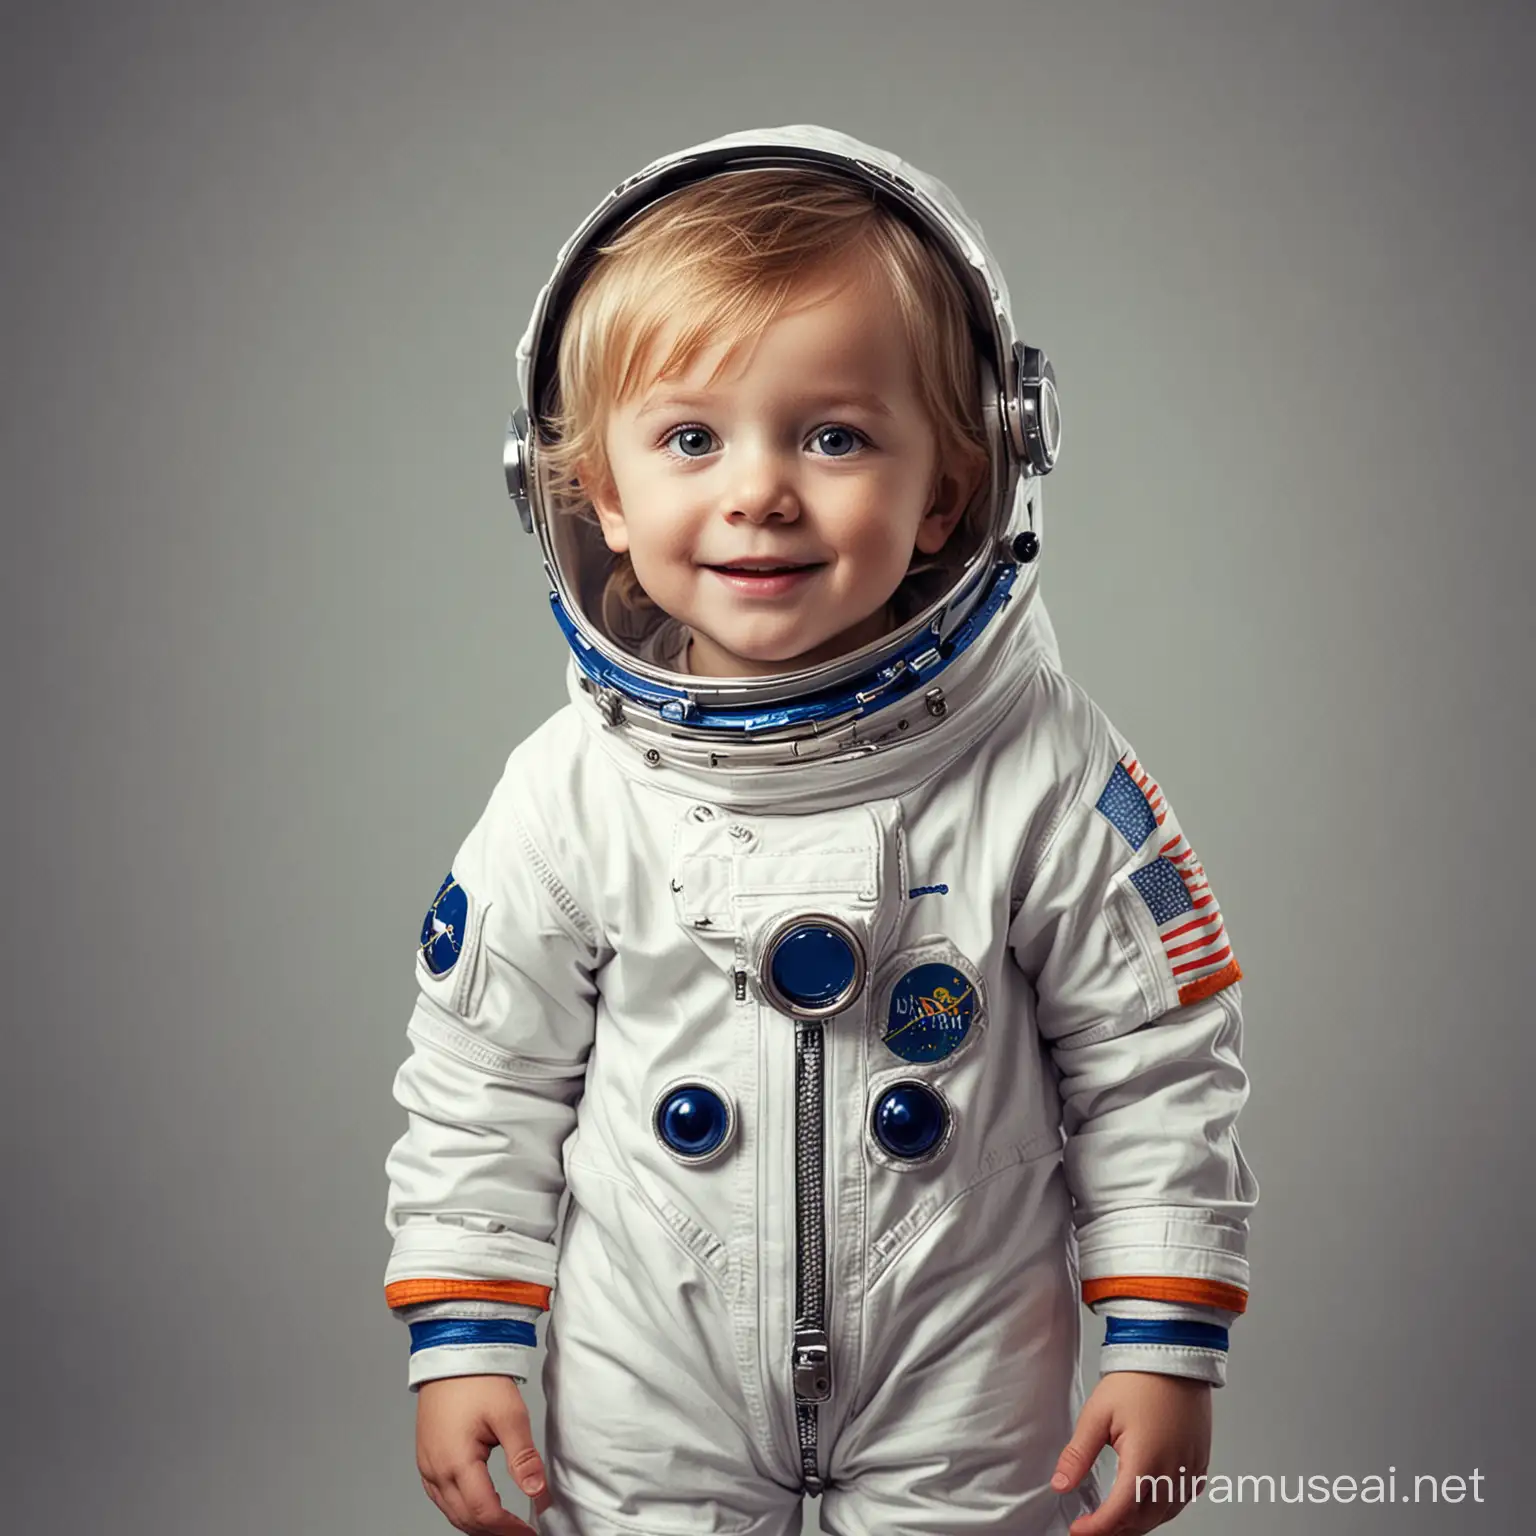 little astronaut boy